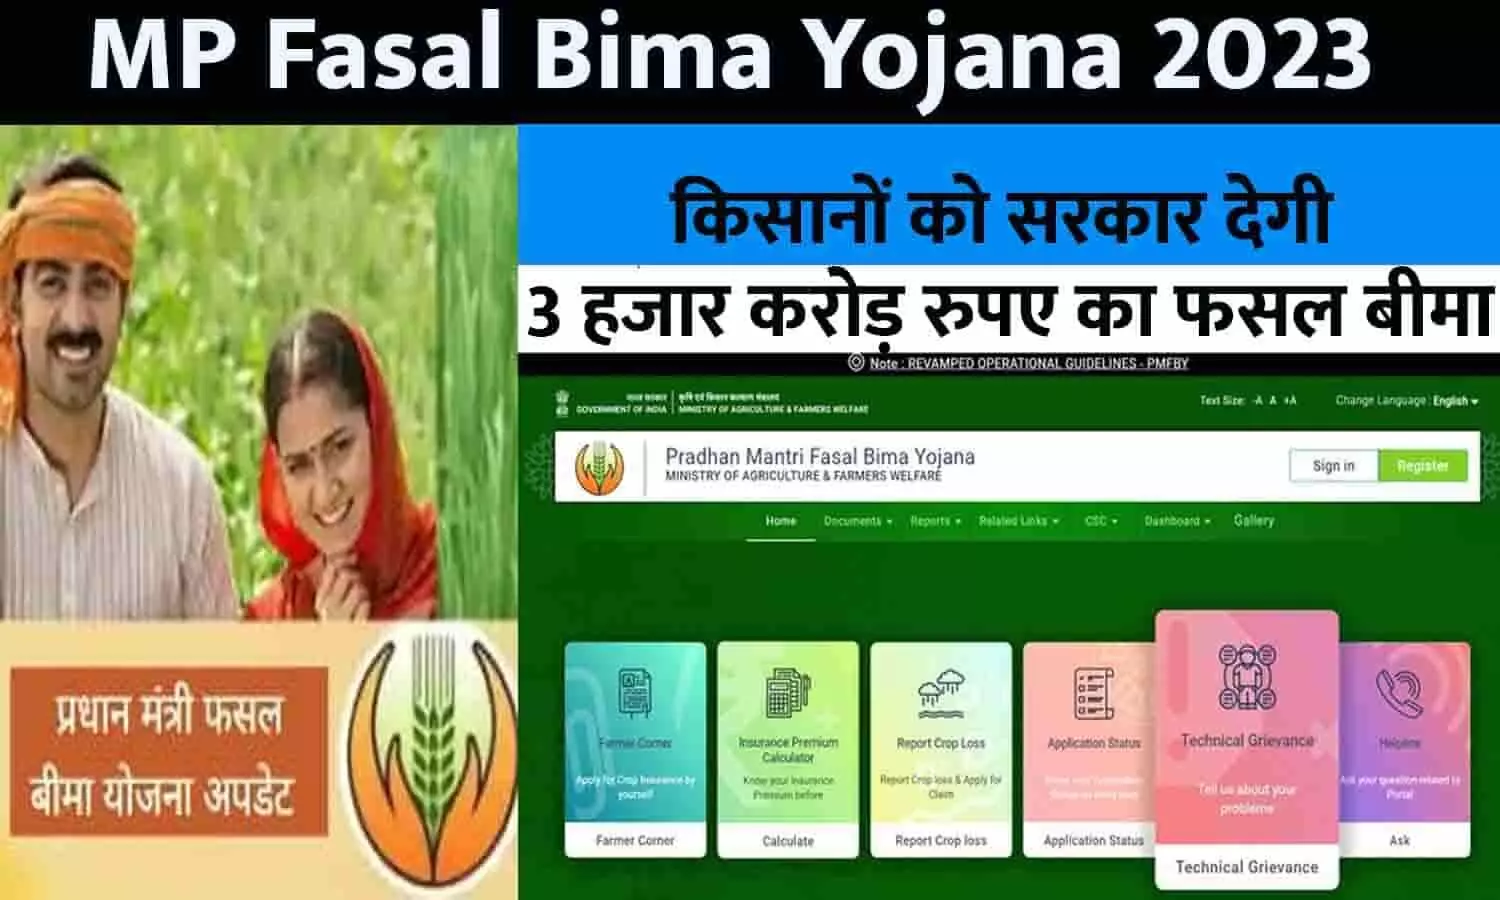 MP Fasal Bima Yojana List In Hindi 2023: गुड न्यूज़! किसानों को सरकार देगी 3 हजार करोड़ रुपए का फसल बीमा